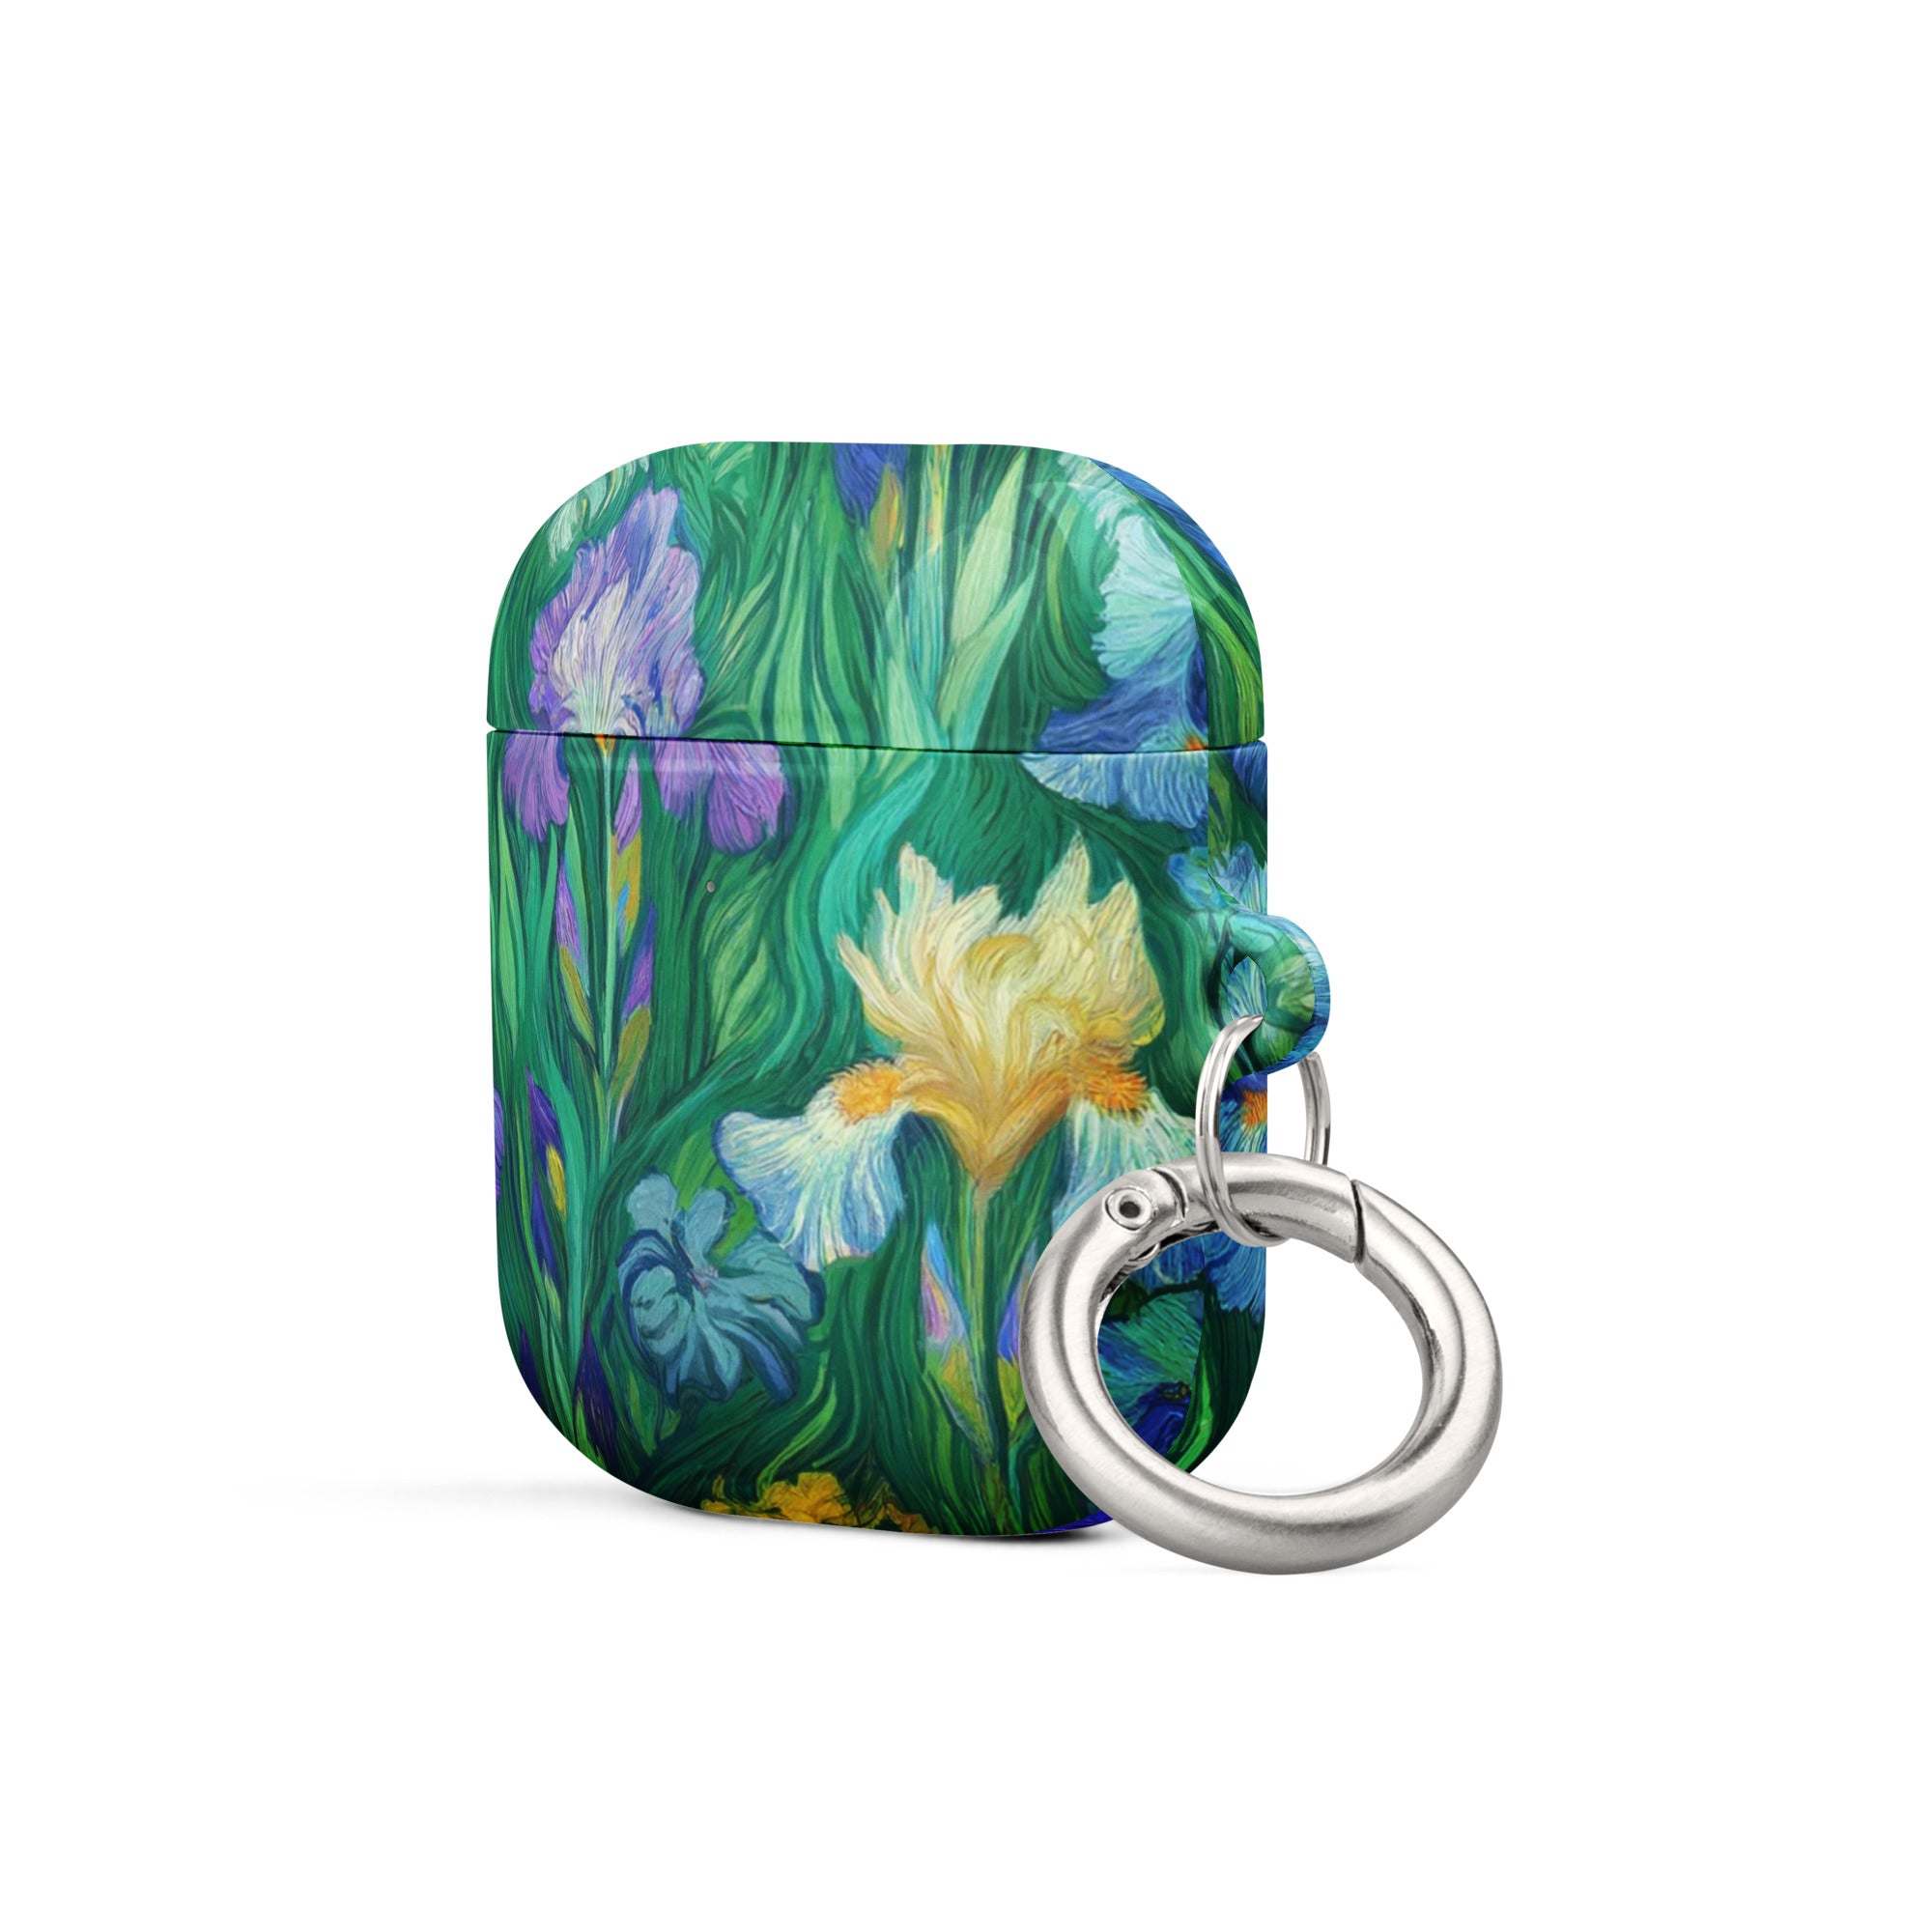 Vincent van Gogh 'Irises' Famous Painting AirPods® Case | Premium Art Case for AirPods®